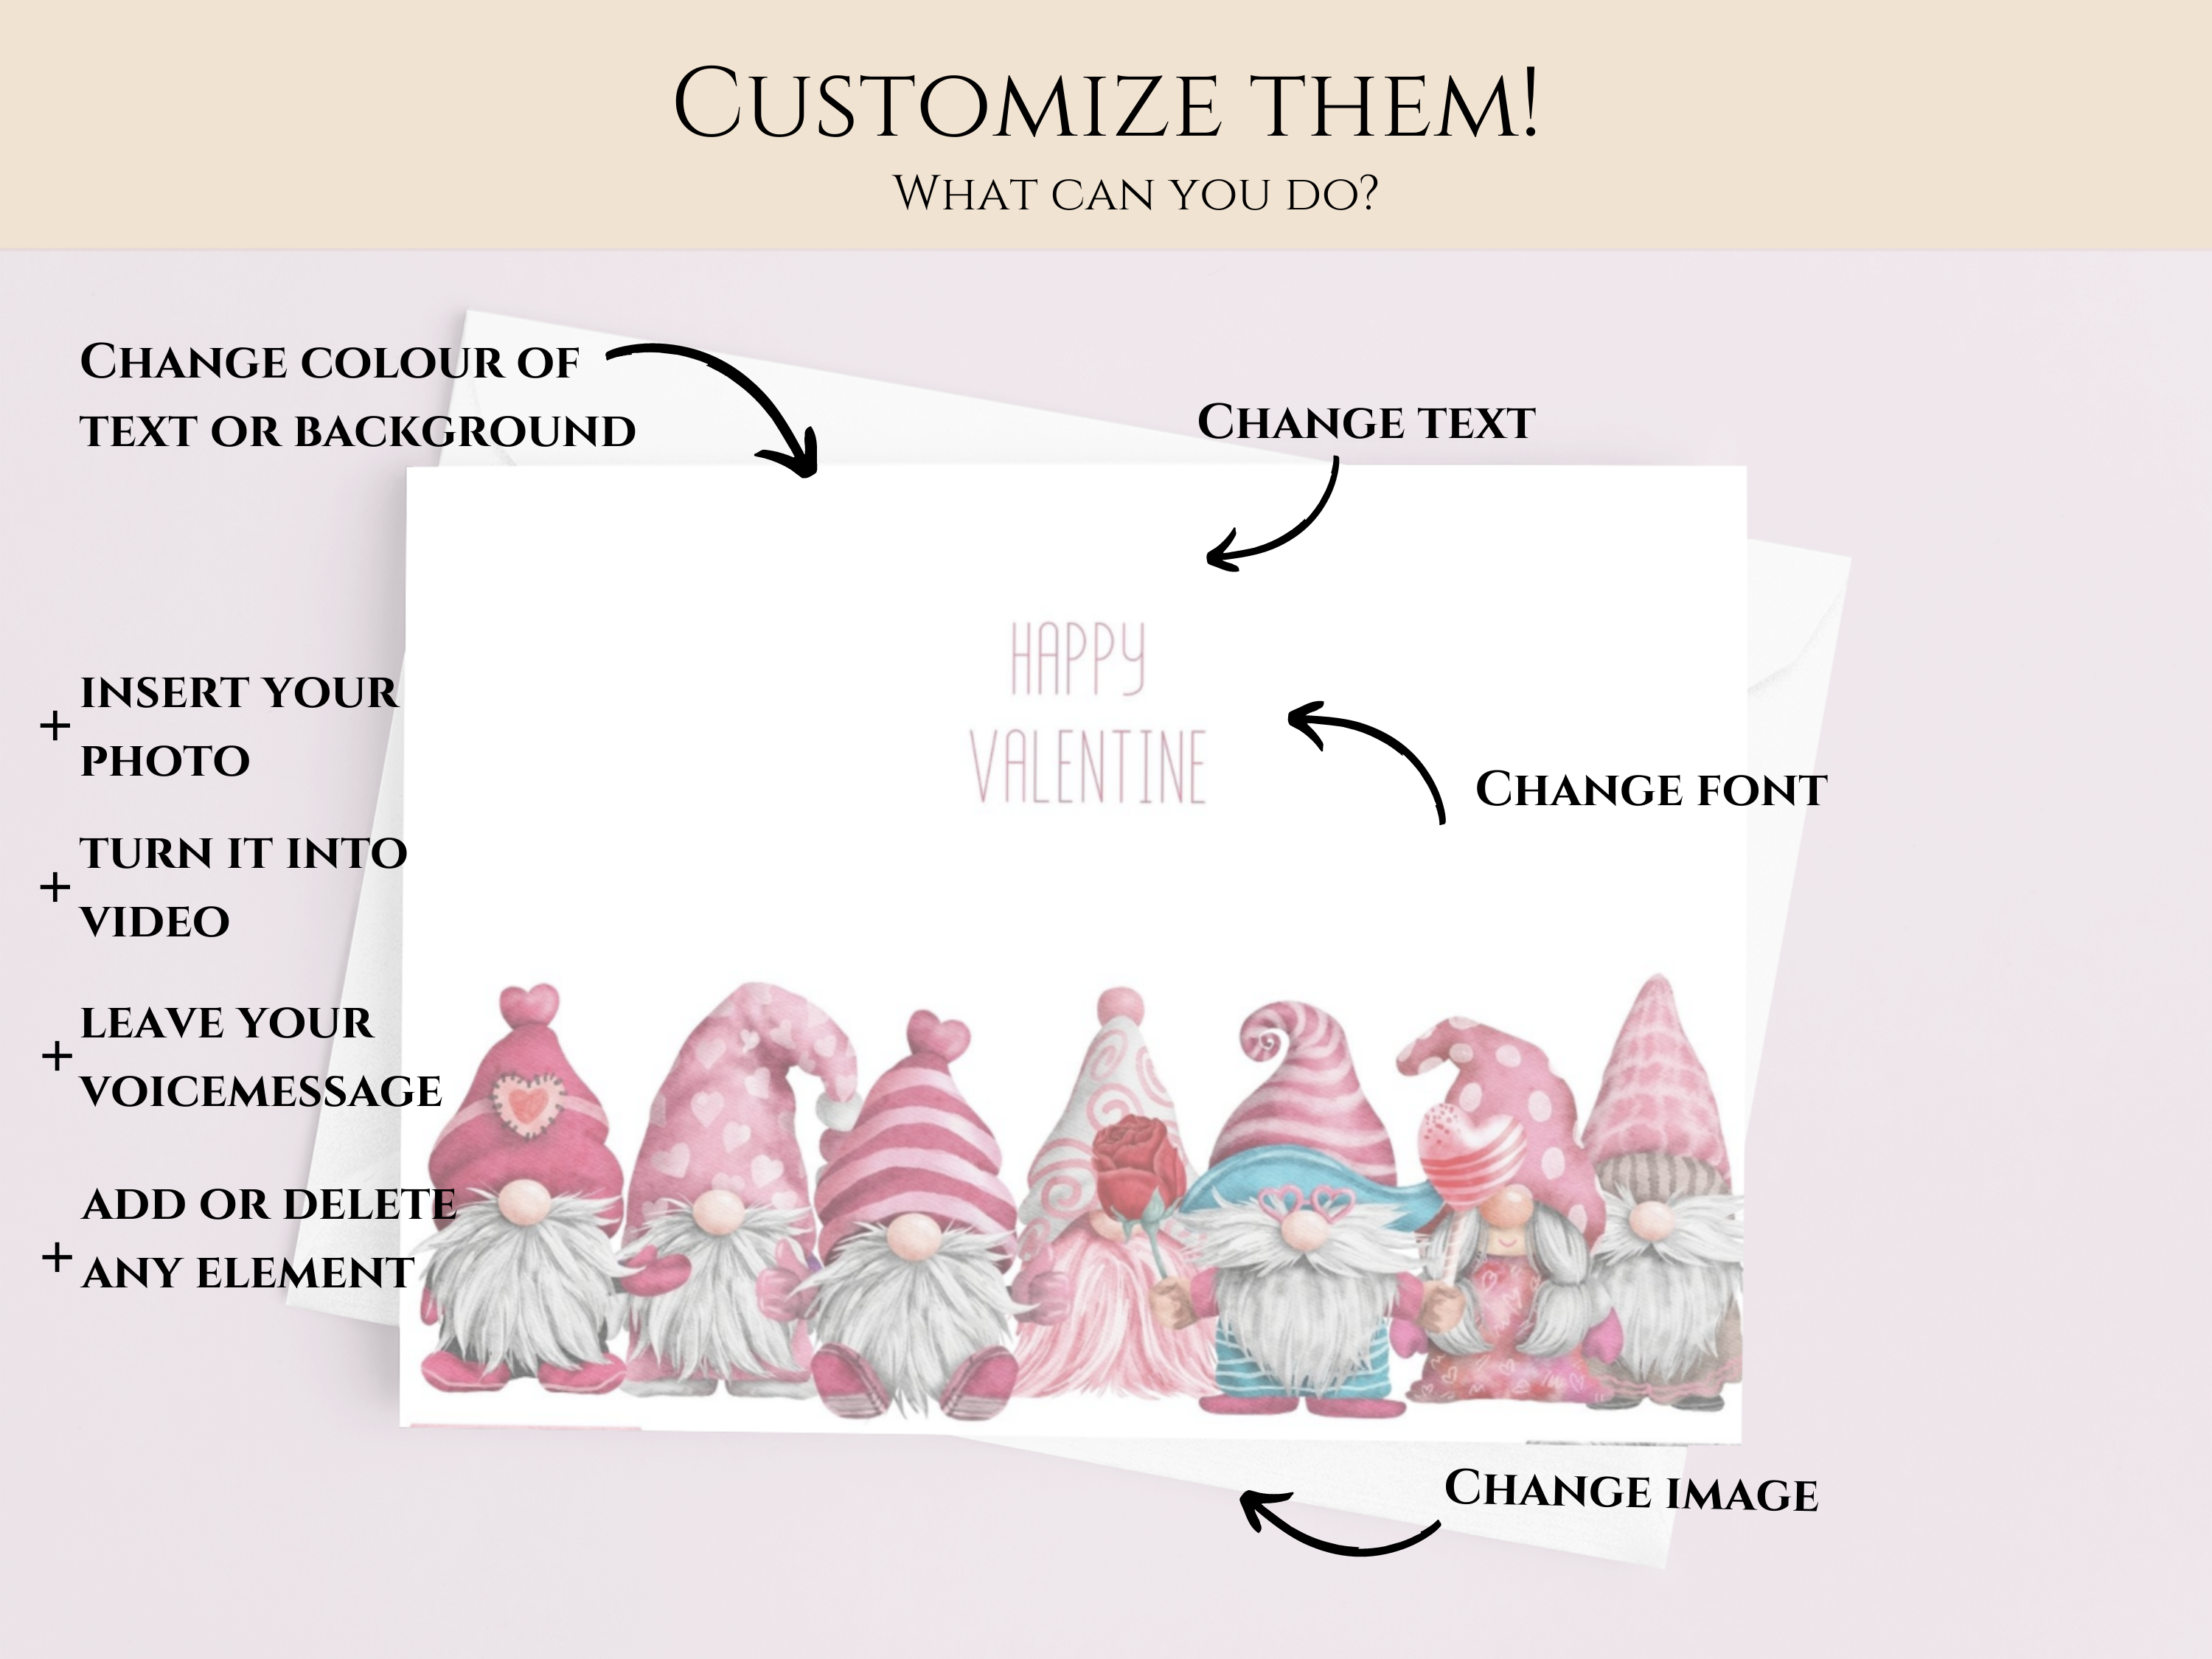 Happy Valentine Gnomes Folded Landscape Valentine Card